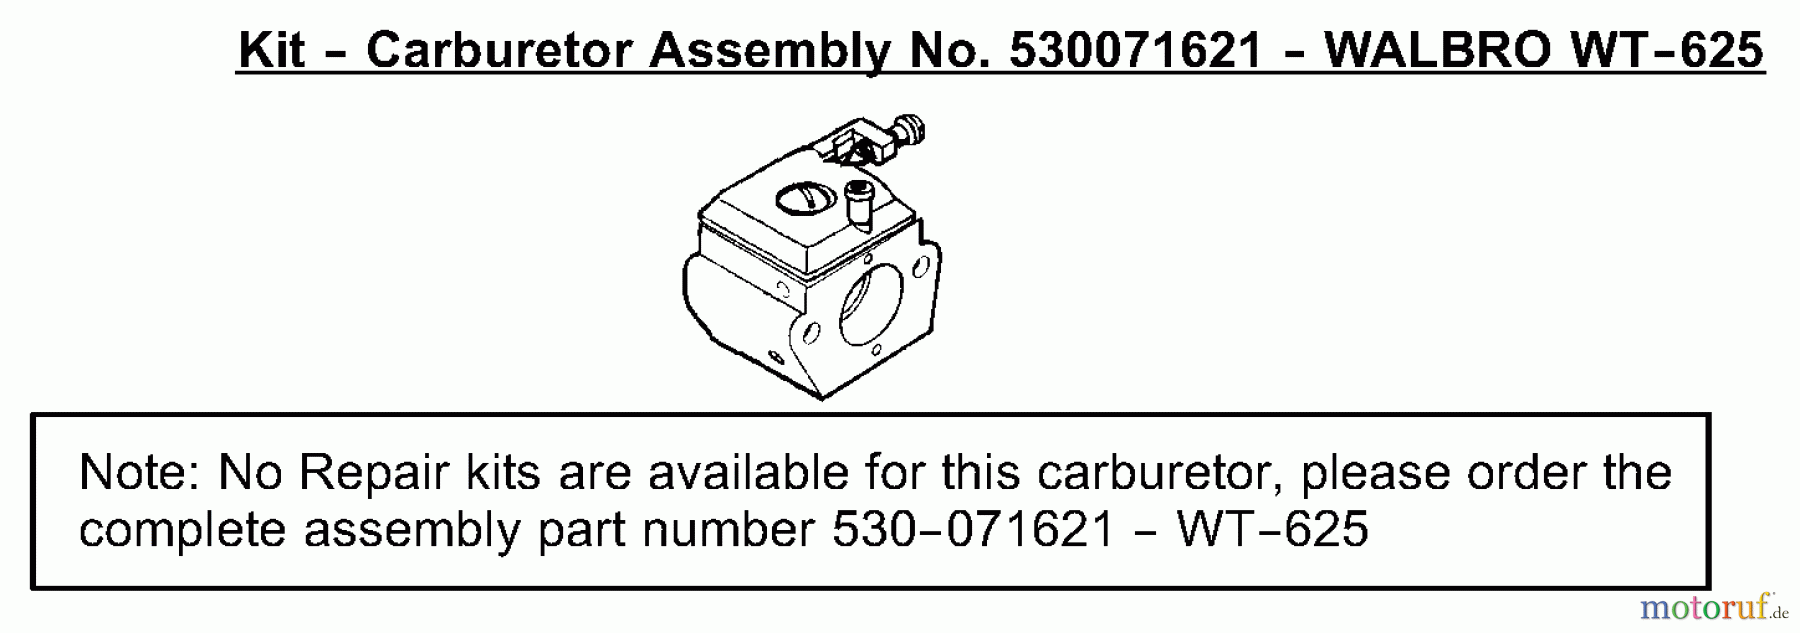  Poulan / Weed Eater Motorsägen PP221 (Type 4) - Poulan Pro Chainsaw Carburetor Assembly (Walbro WT625) 530071621